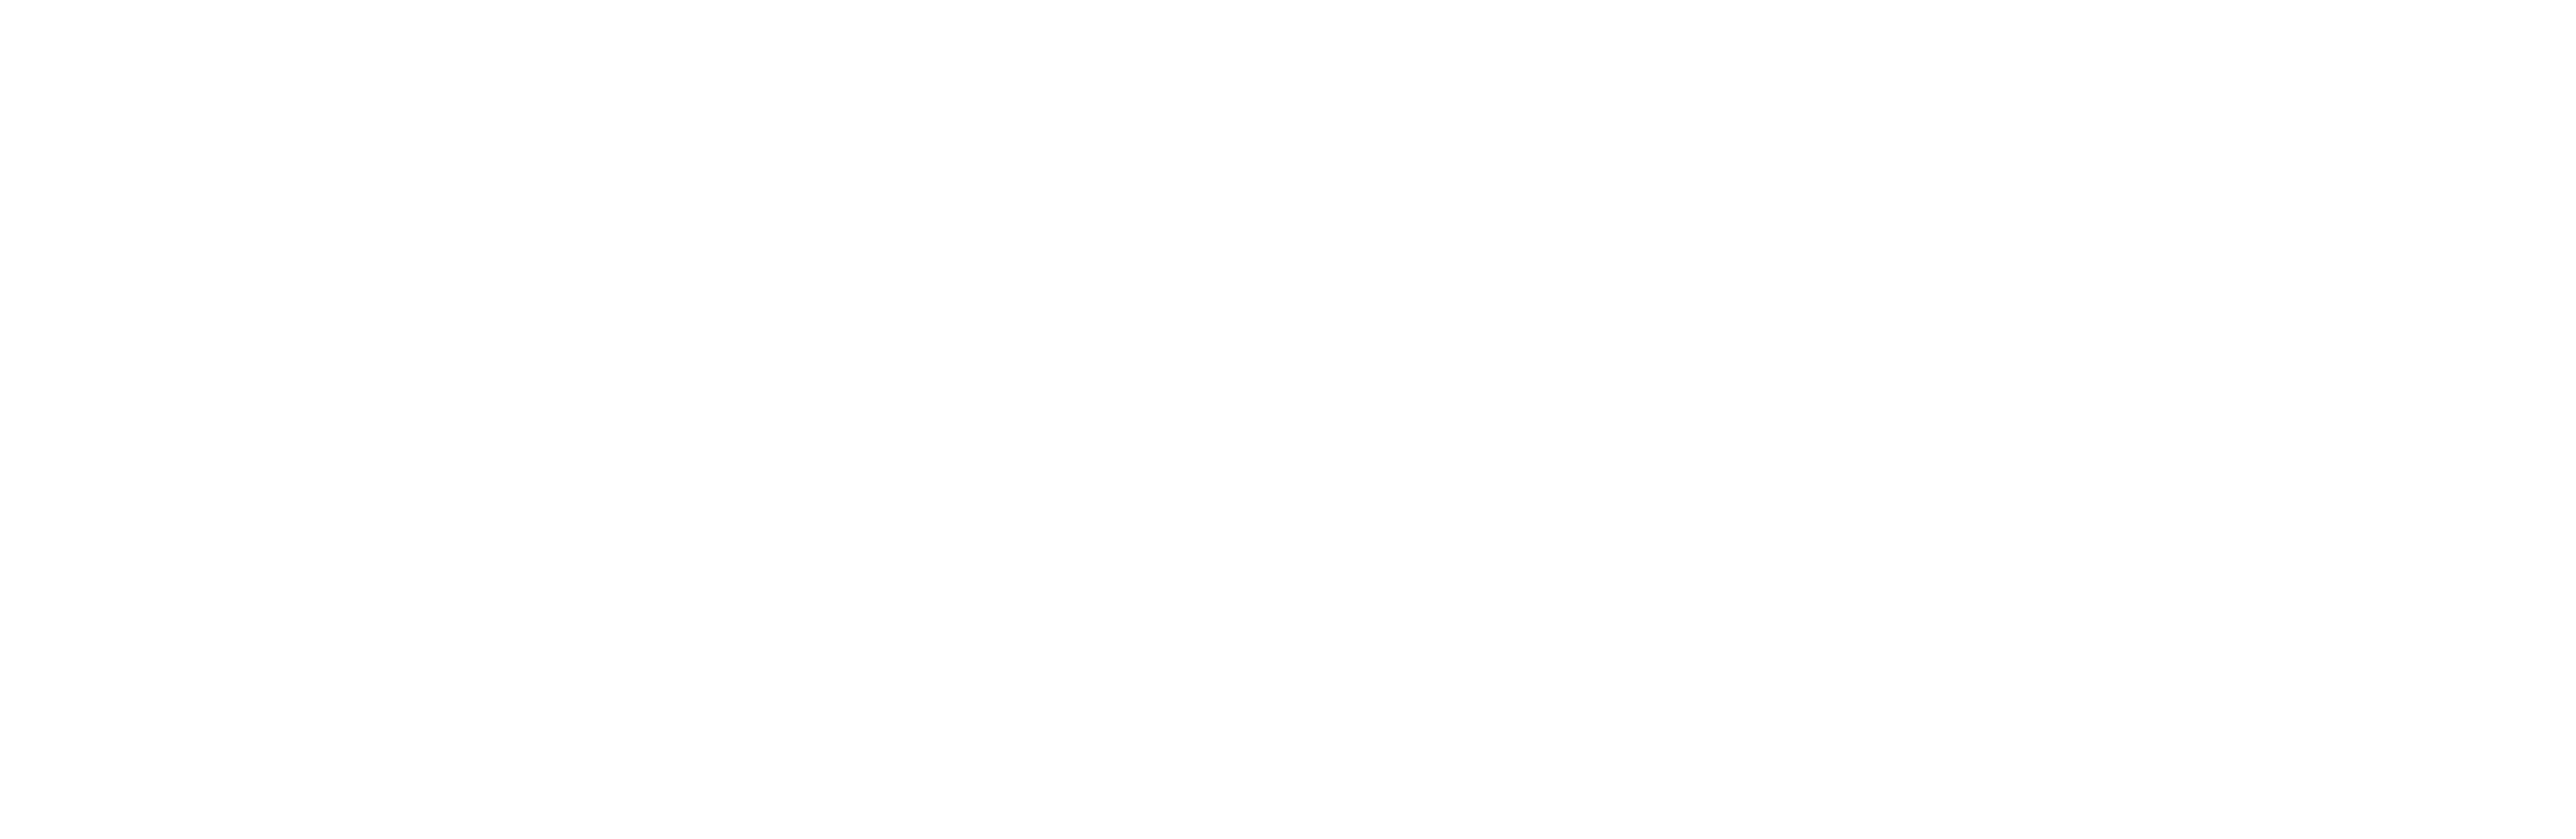 Successful Innovations - Logo - White - Horizontal